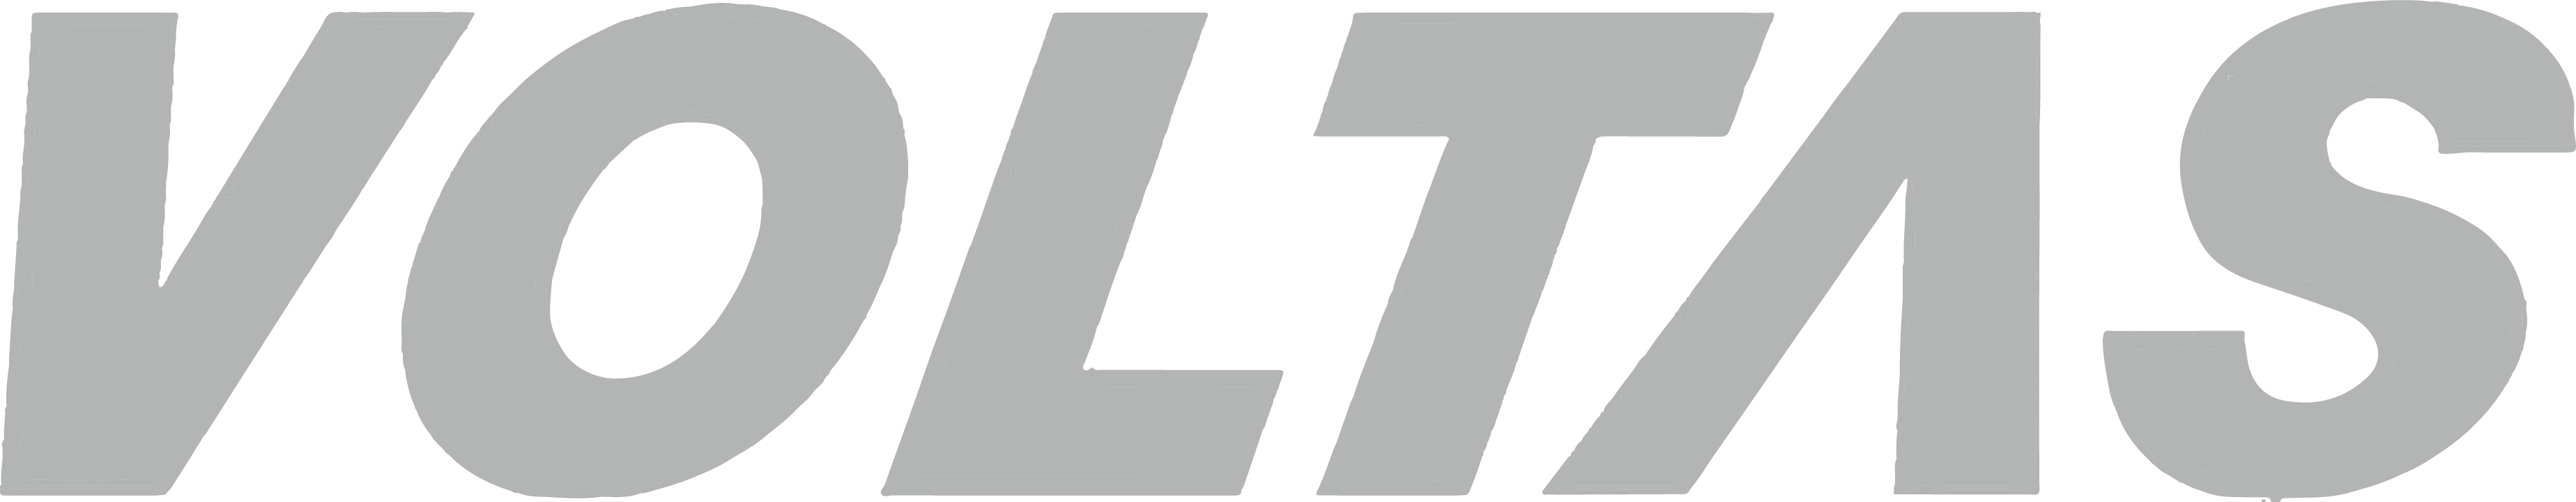 logo-14